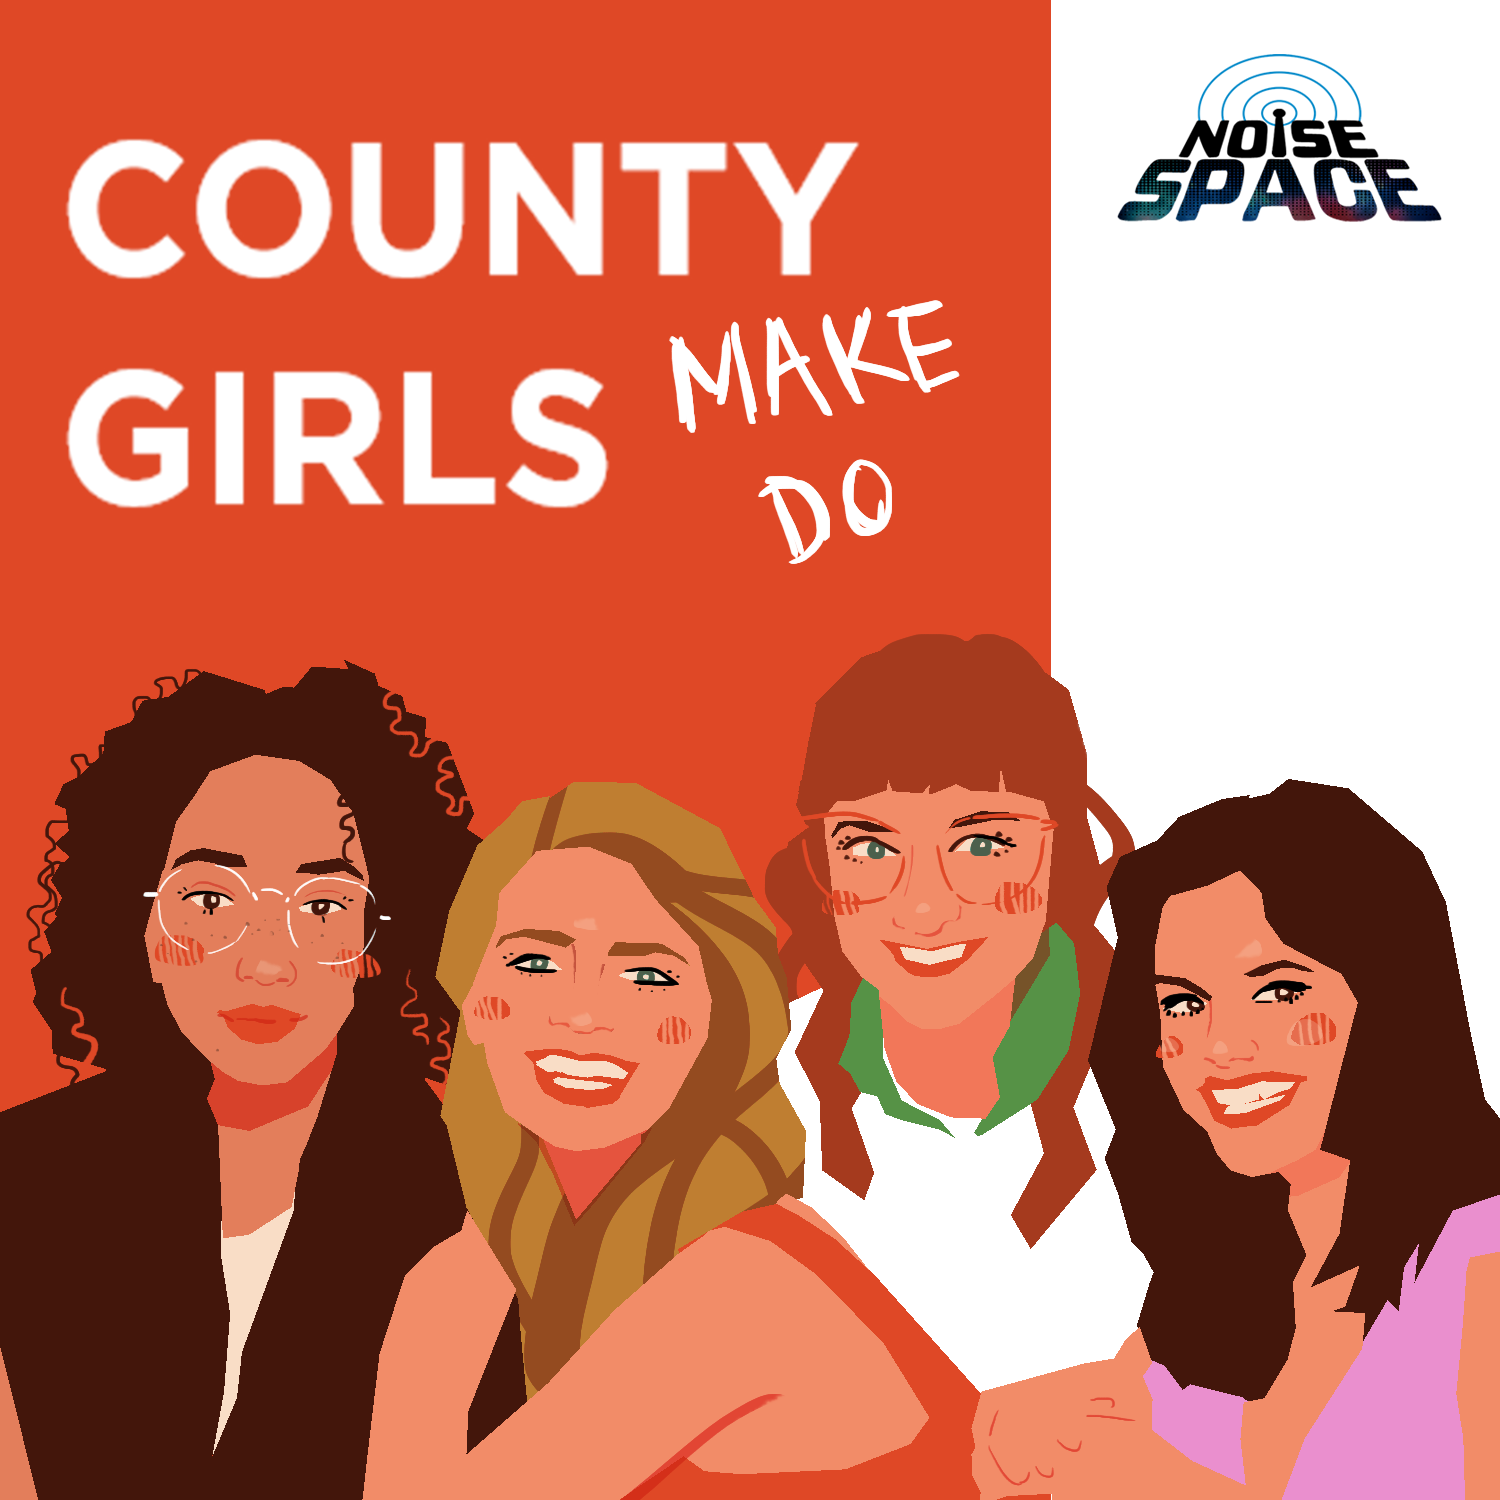 County Girls Make Do